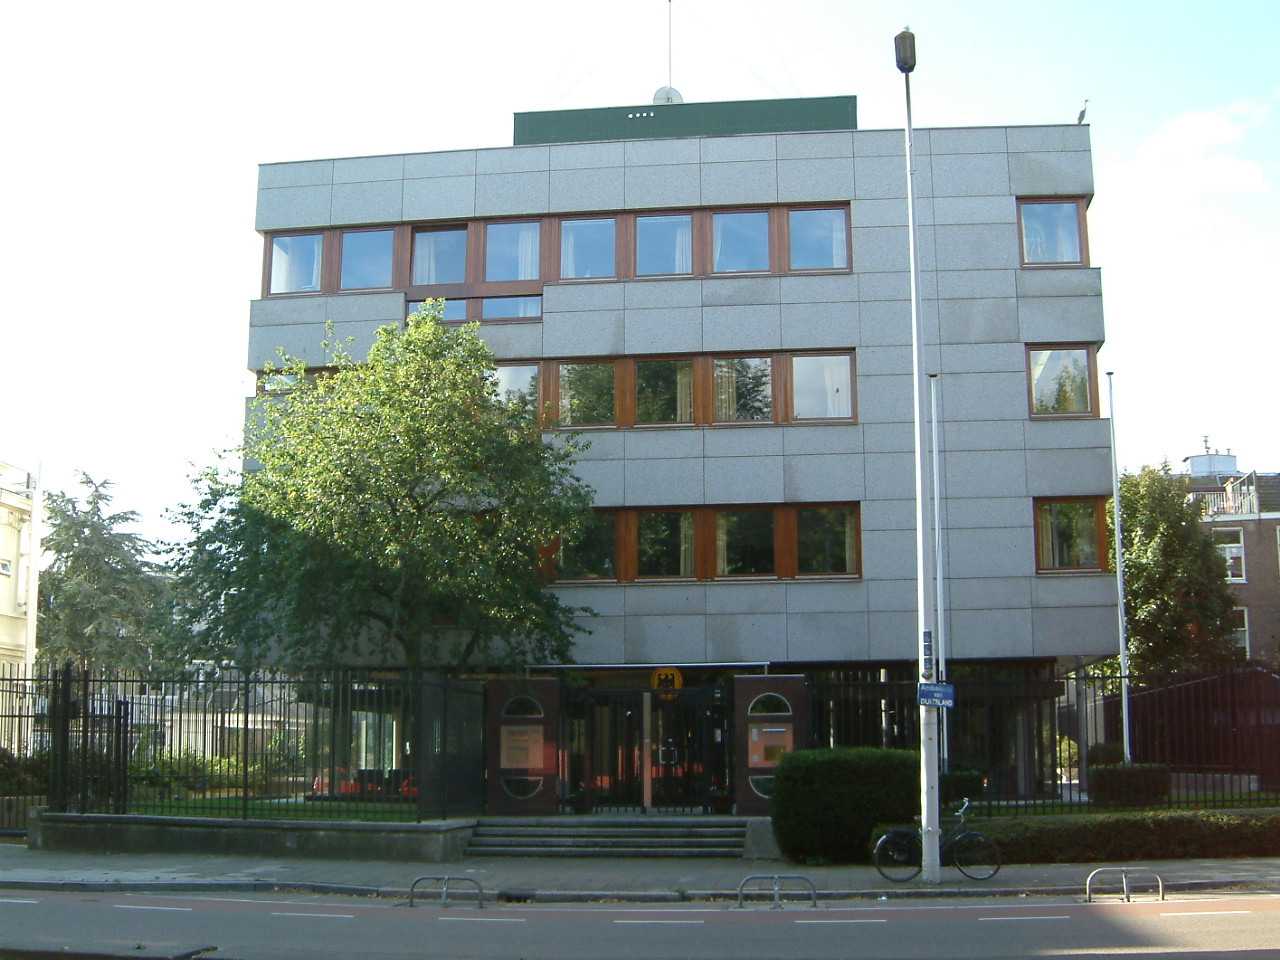 Kanselarij van de Duitse ambassade te Den Haag